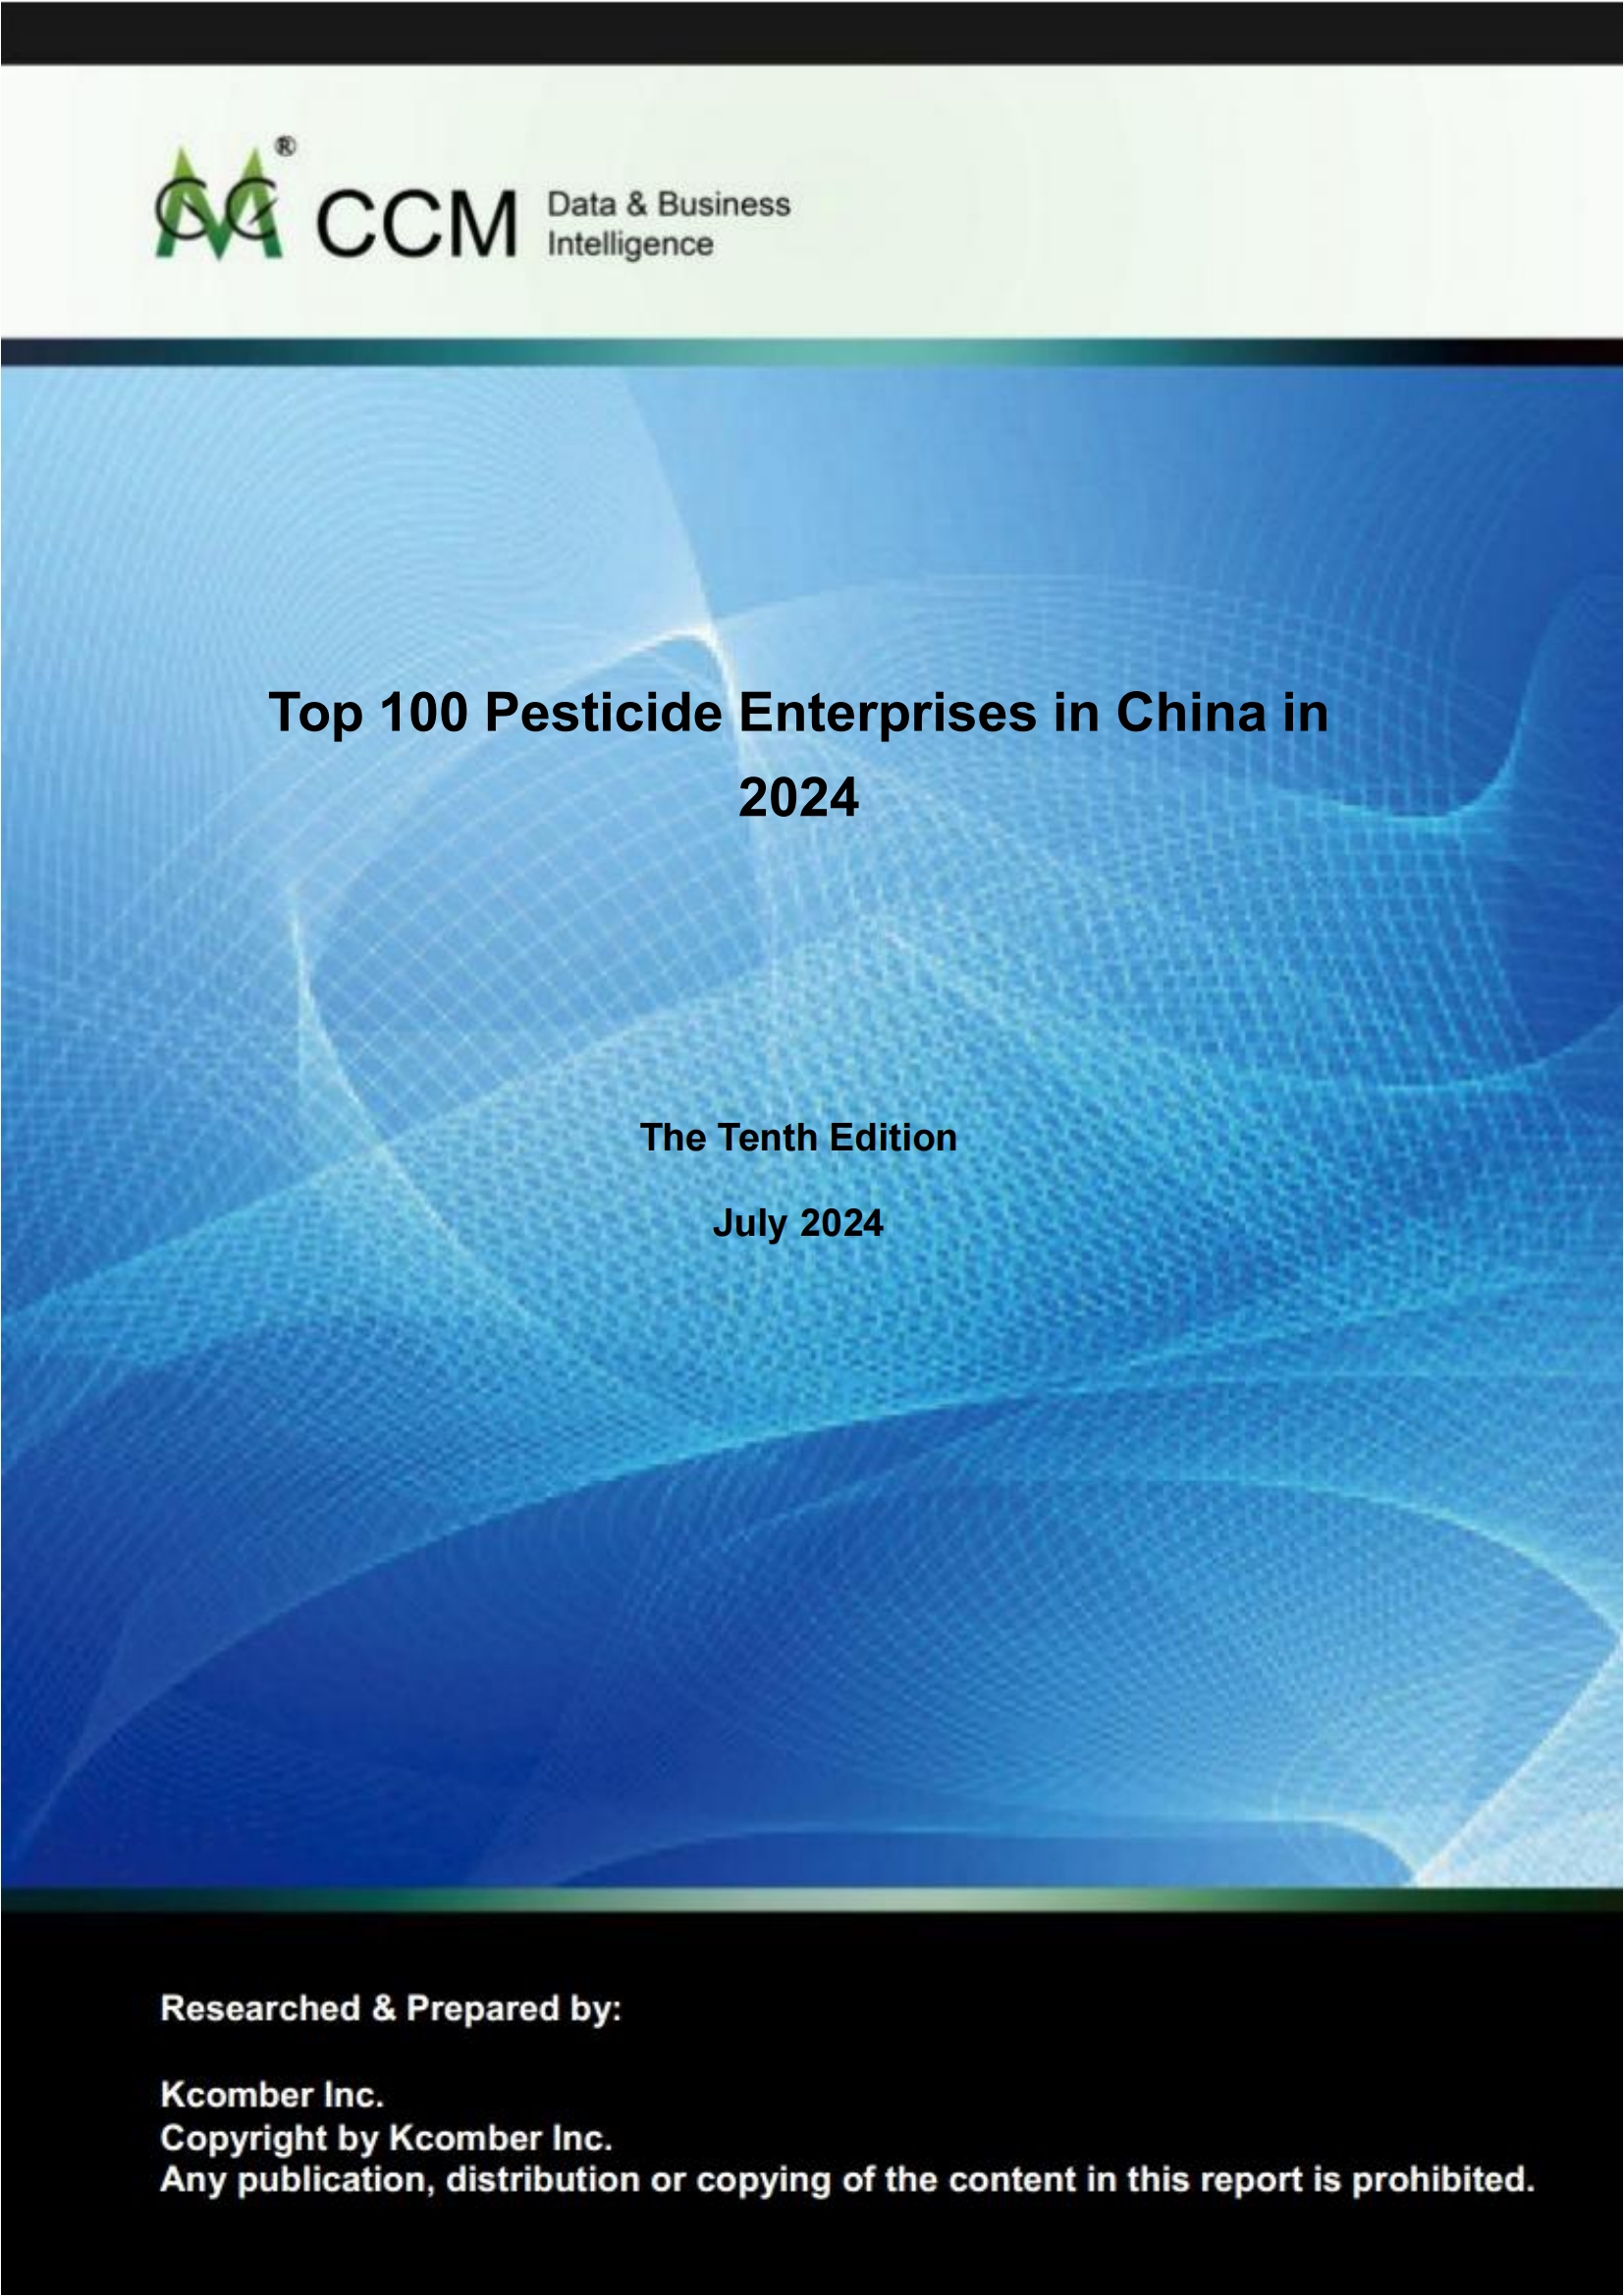 Top 100 Pesticide Enterprises in China in 2024